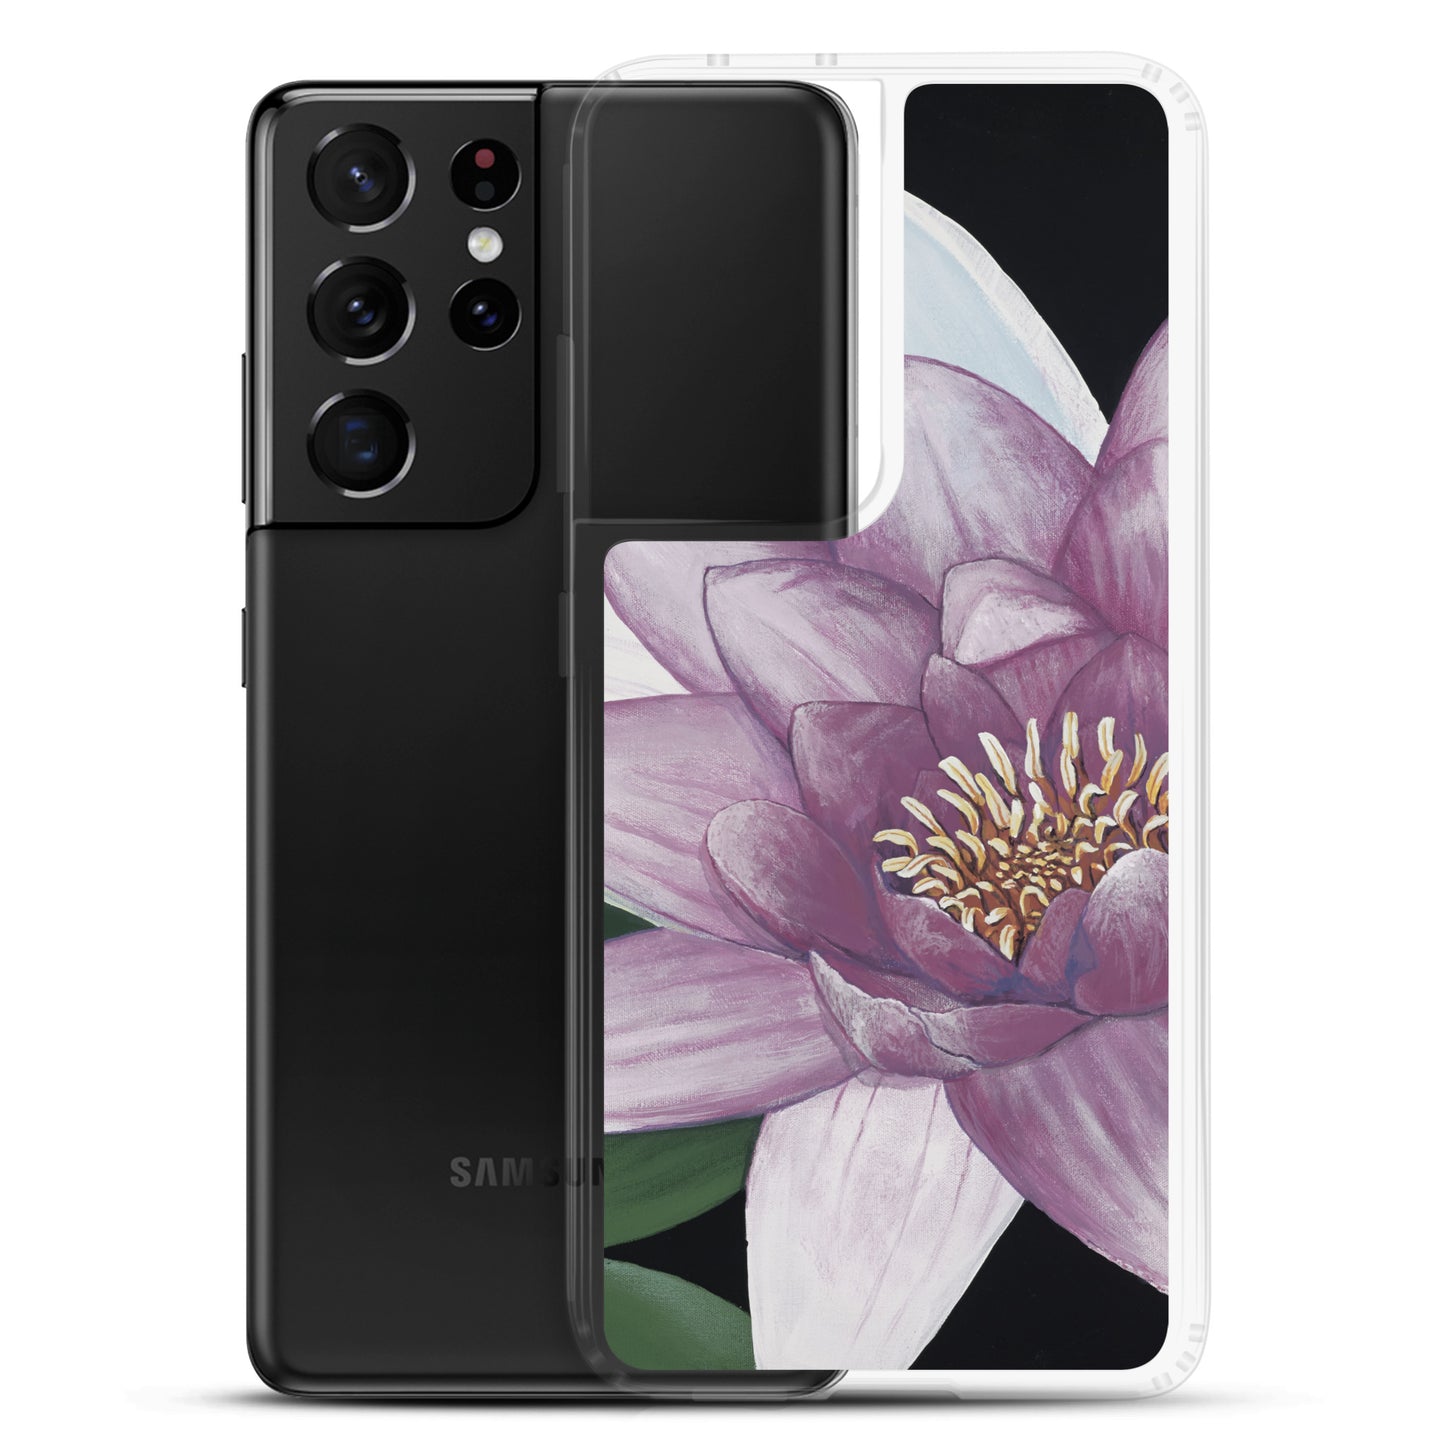 "Lotus Bloomed" Samsung Case